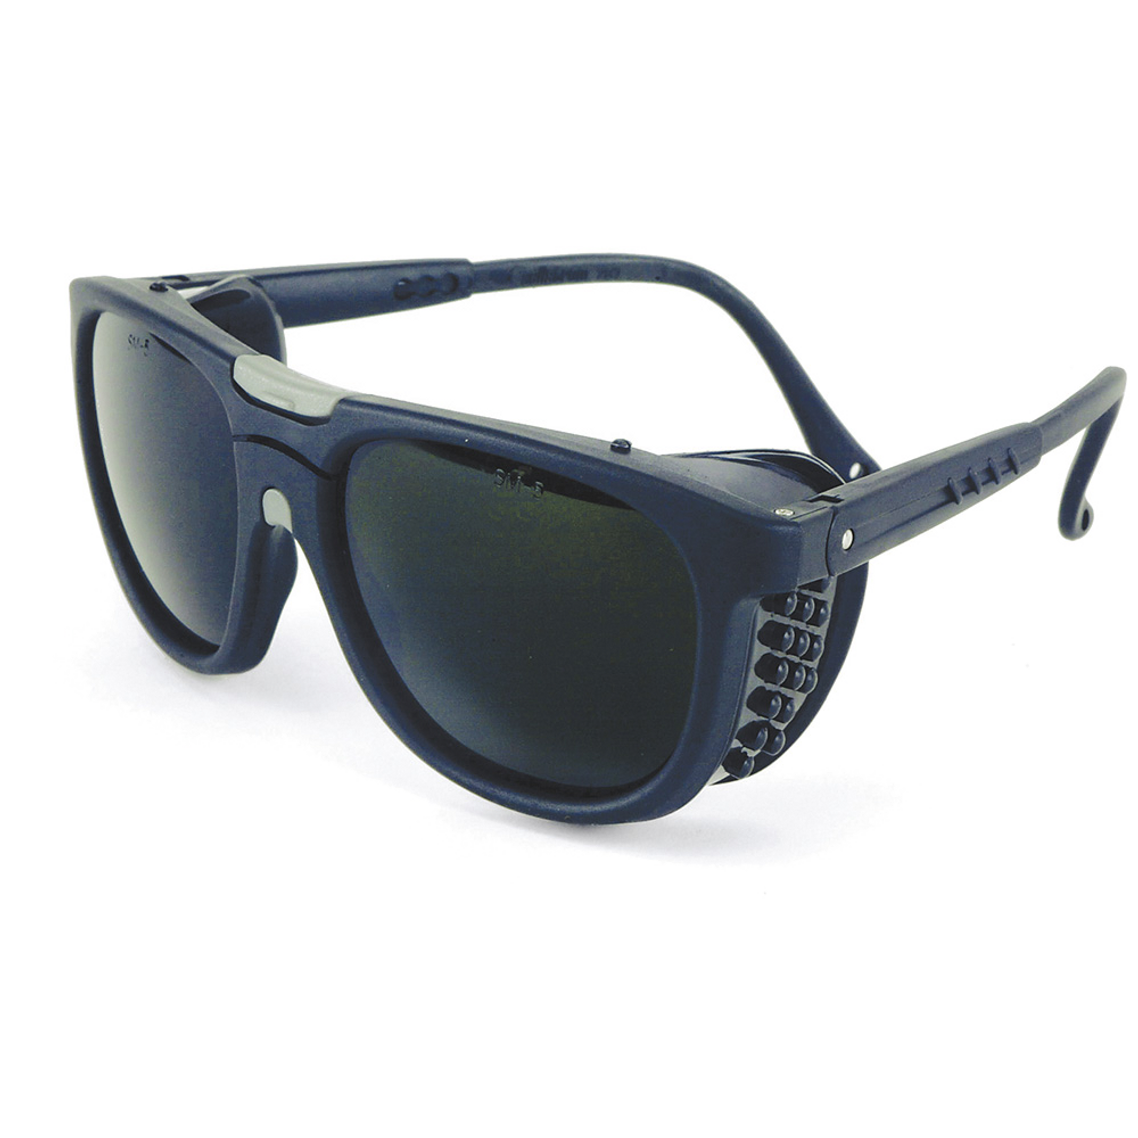 Sellstorm B5 Safety Glasses - Shade 5 IR | Safetywear.ca